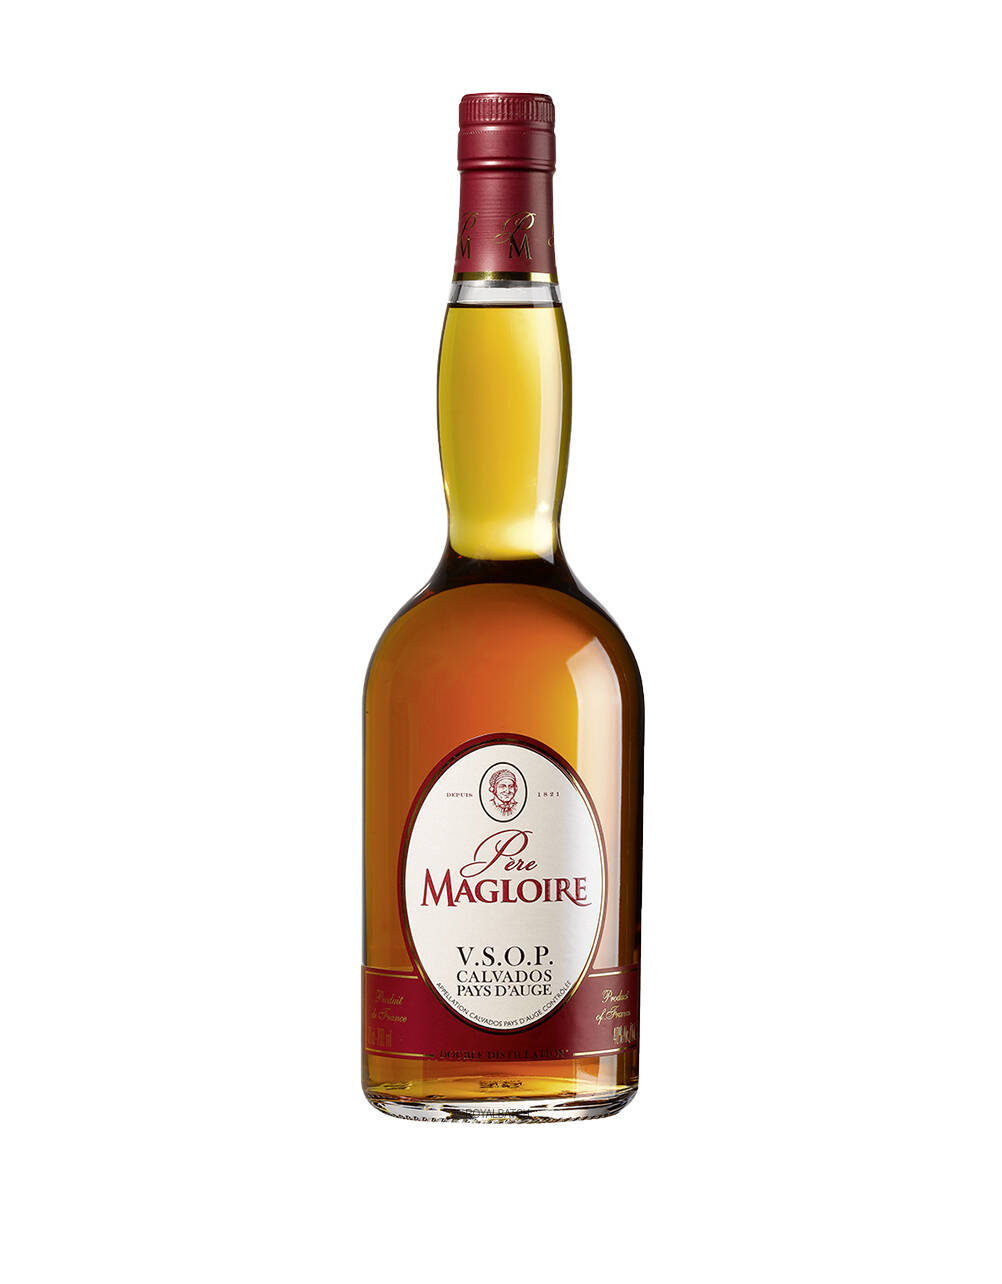 Pere Magloire VSOP Calvados Pays D'auge Apple Cider